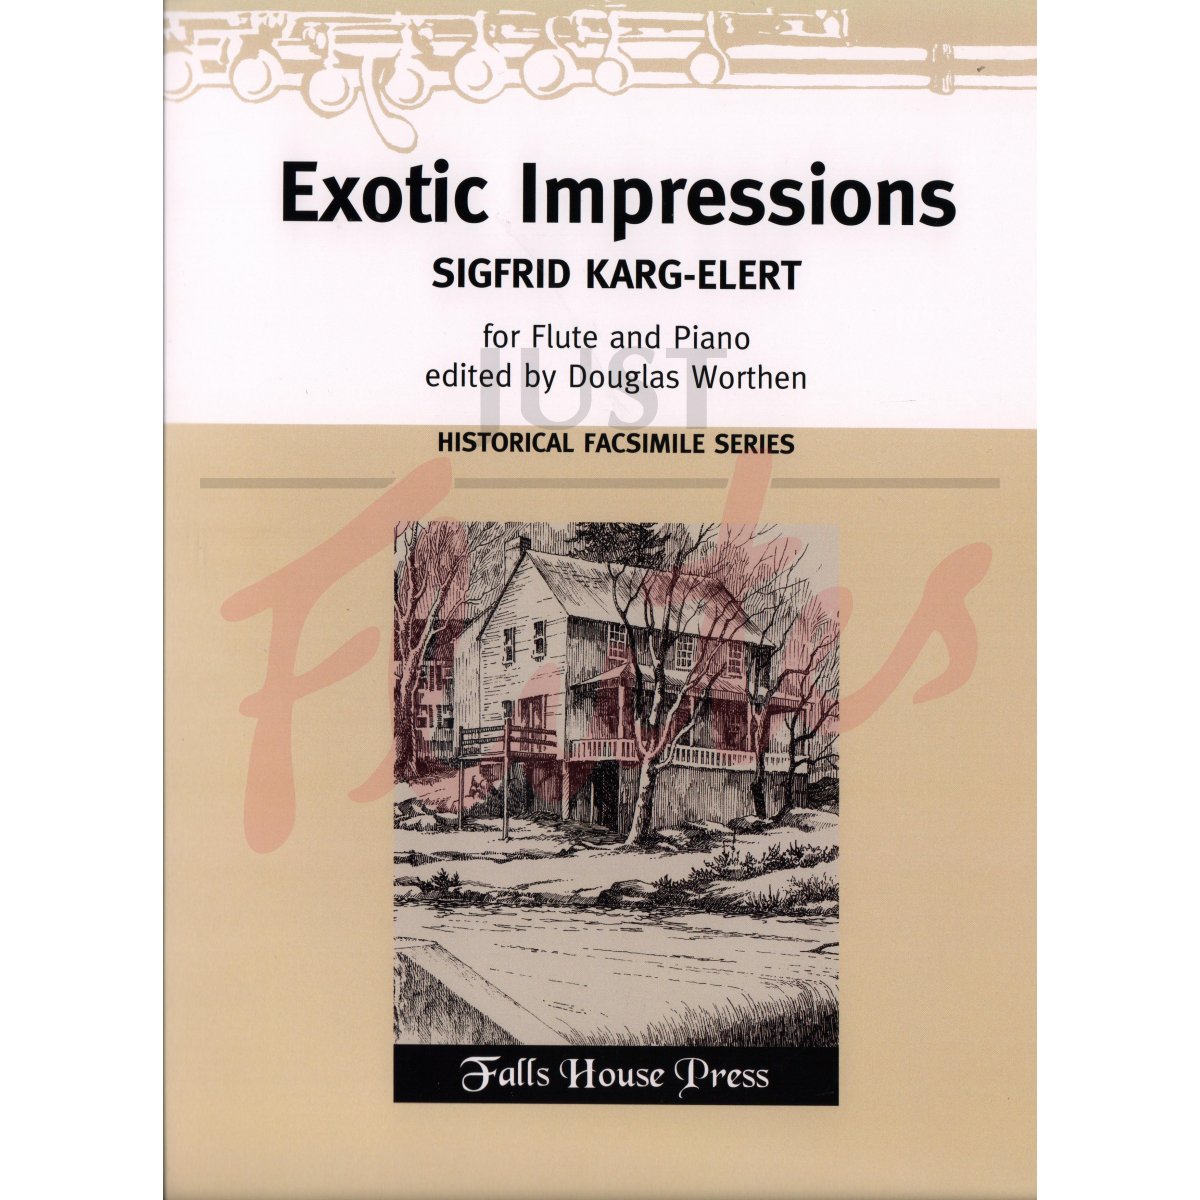 Exotic Impressions